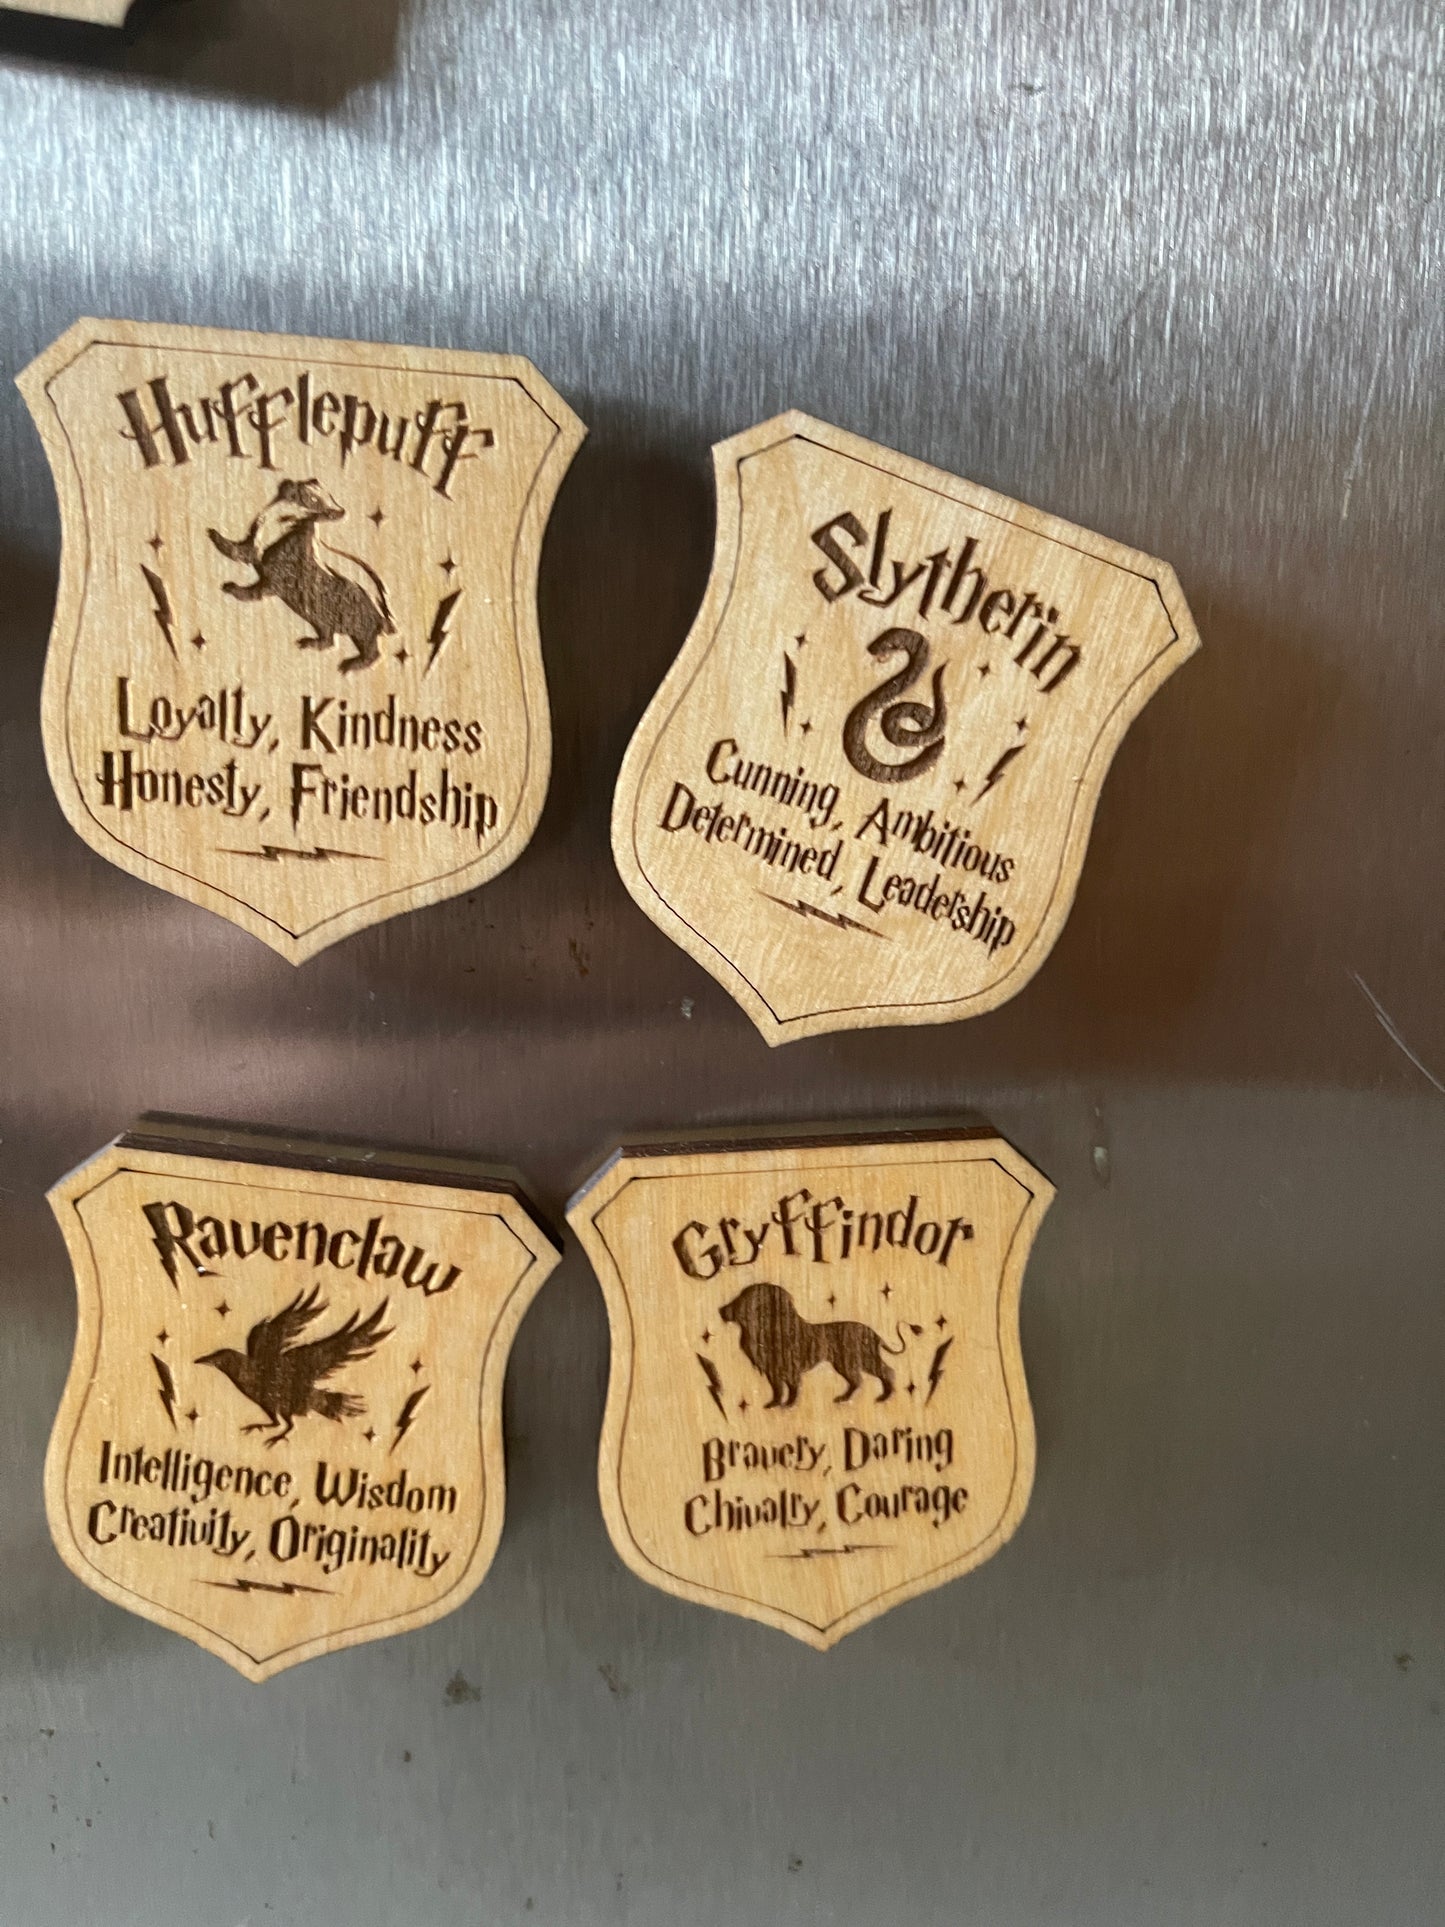 Wizarding World fridge magnets